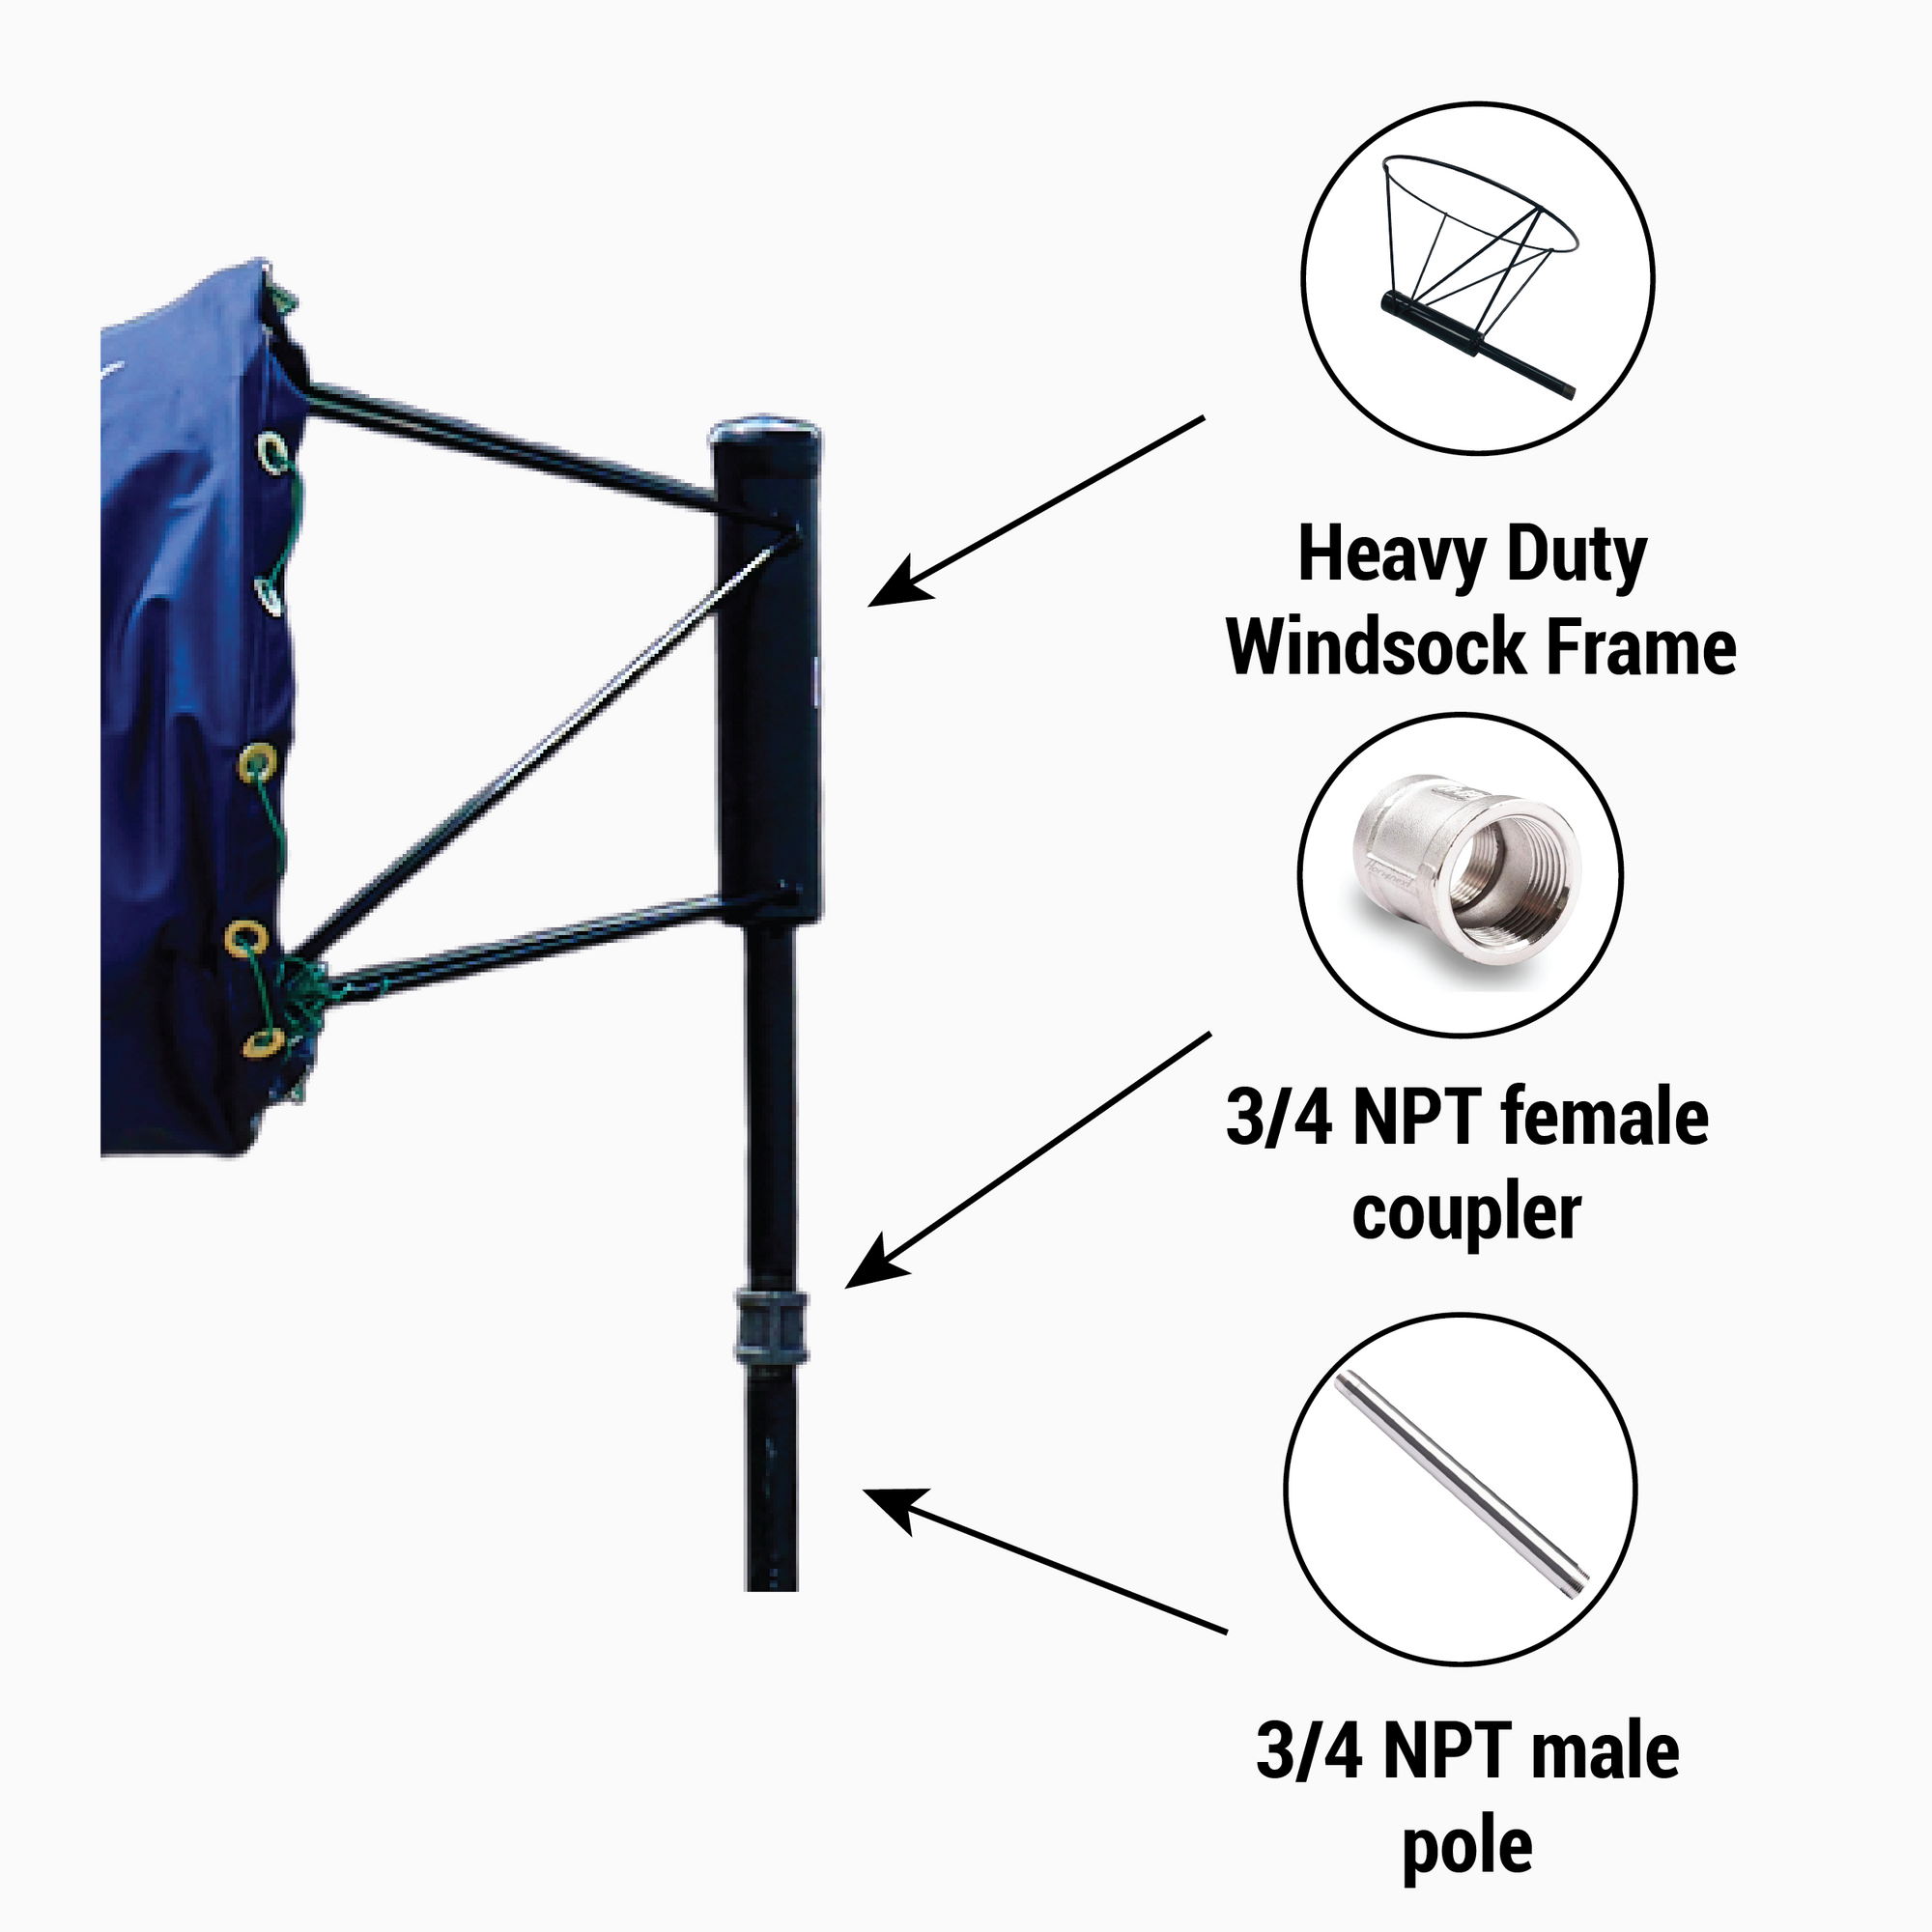 How to Install a Windsock Frame onto a Pole | Custom Windsock Co - The ...